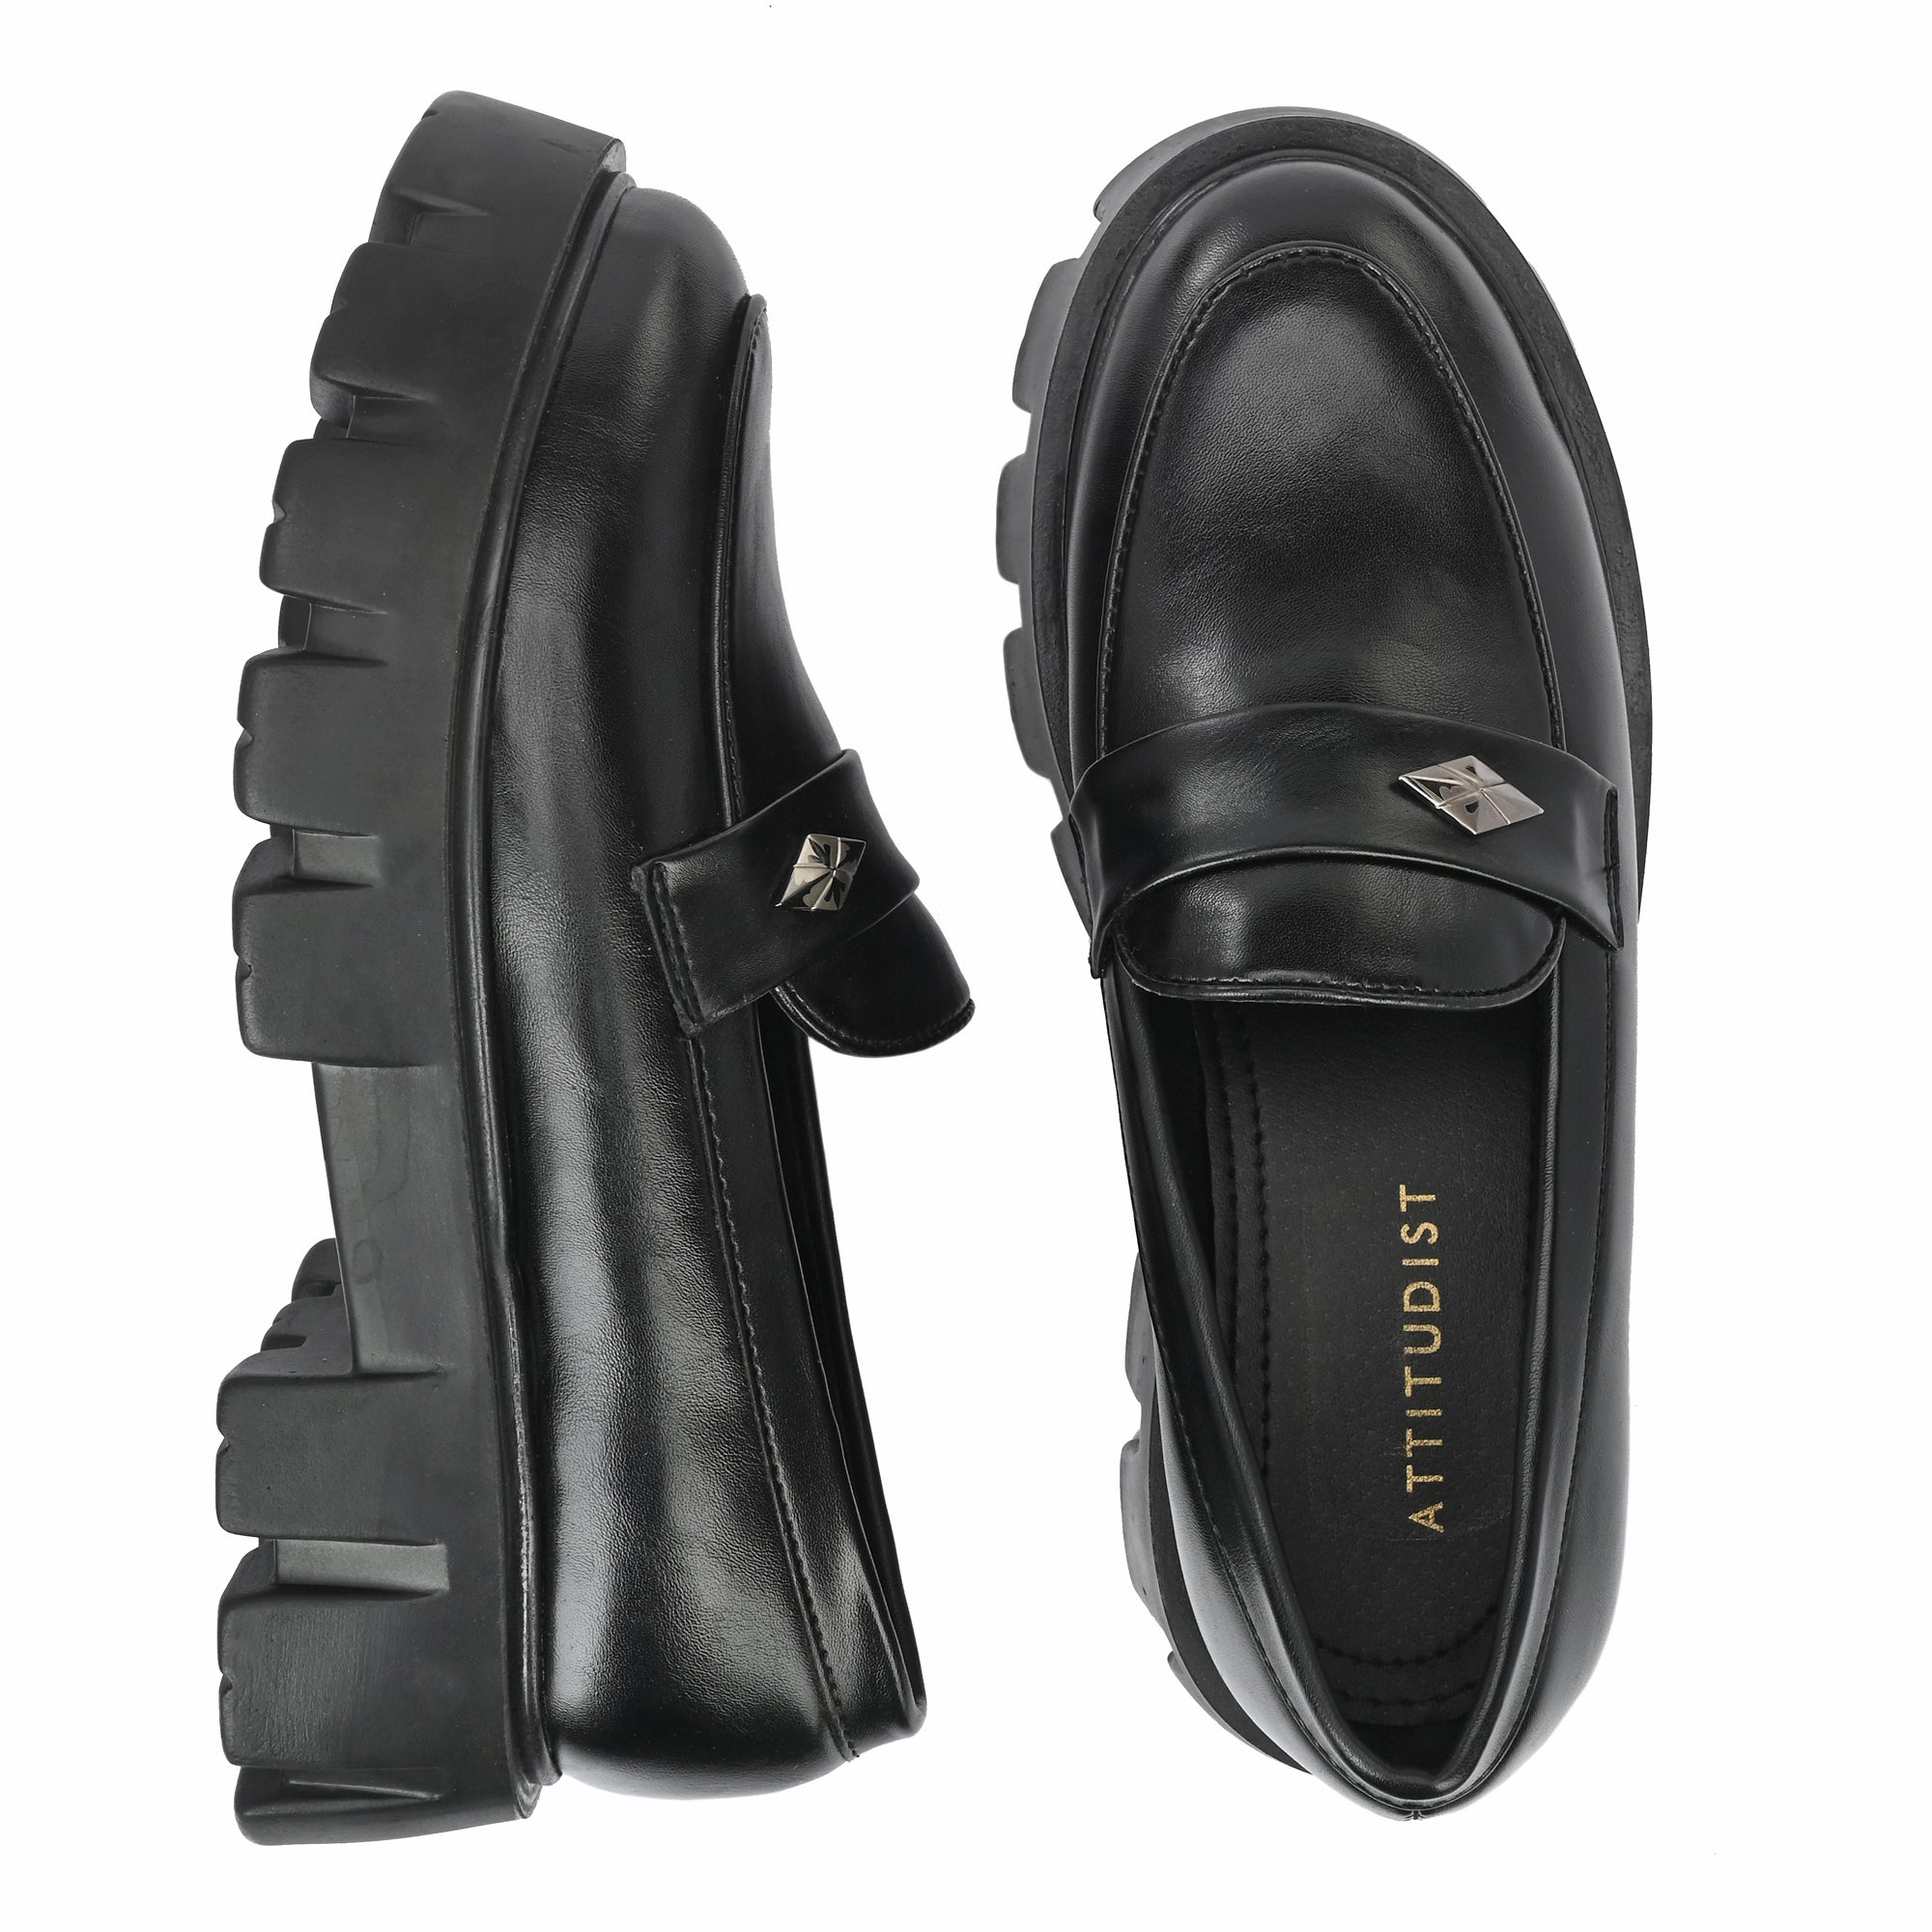 attitudist-black-round-toe-high-heel-penny-loafers-for-men